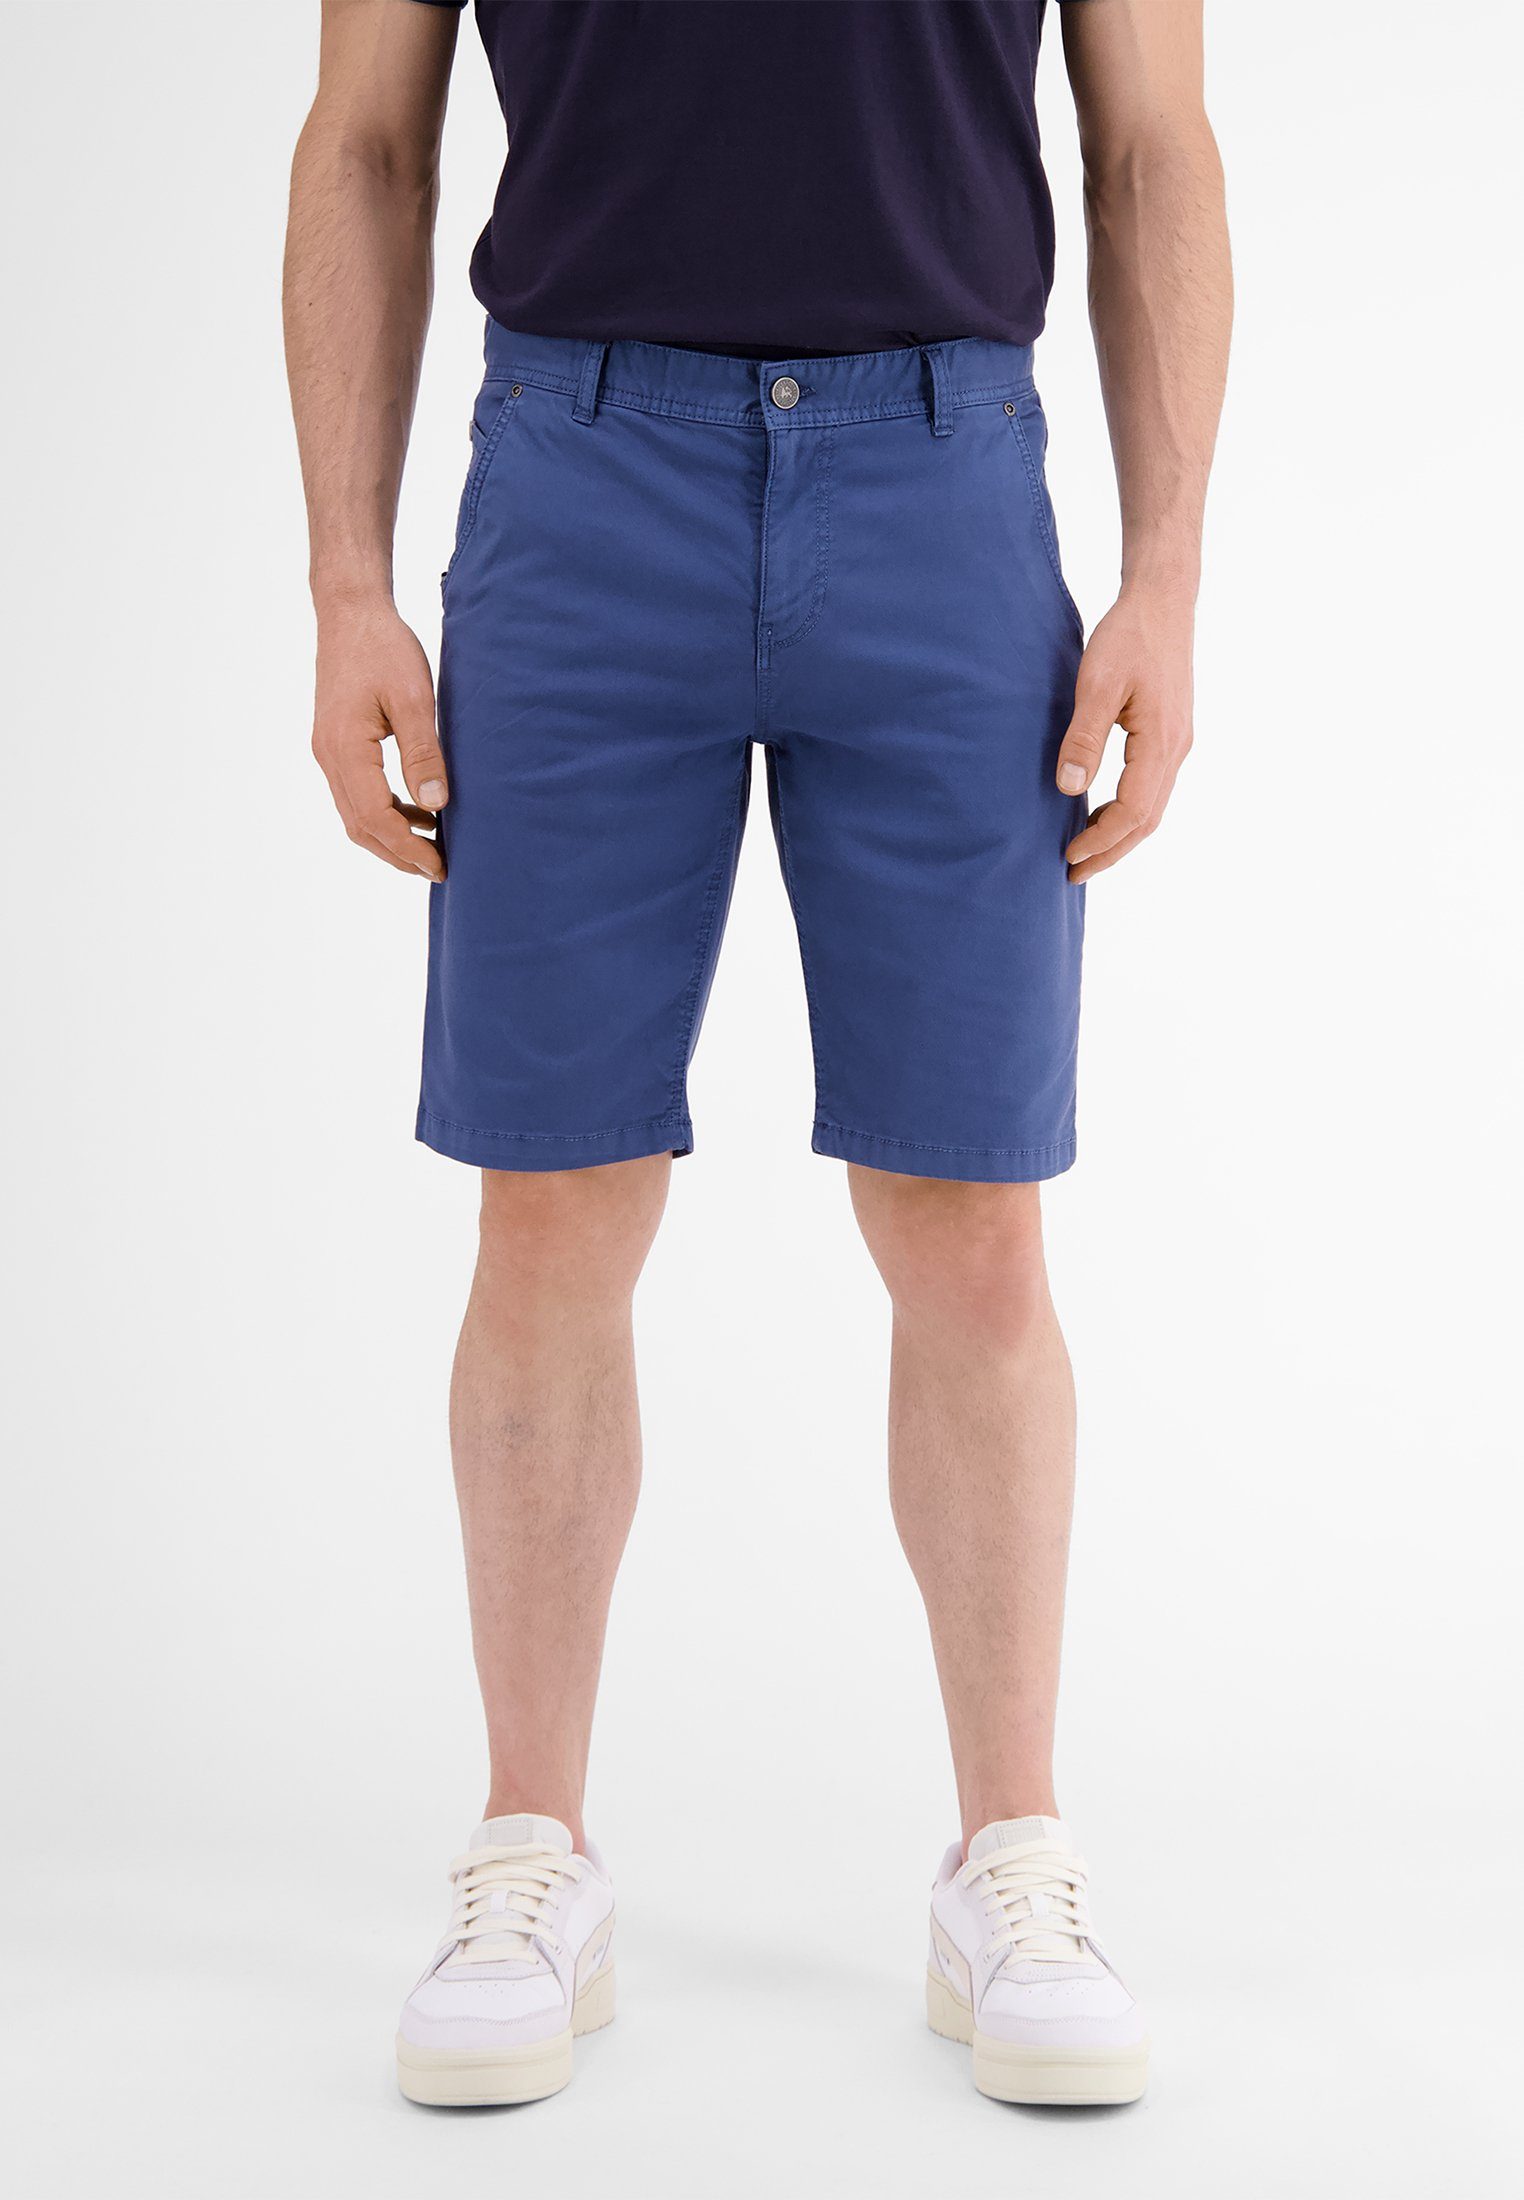 LERROS TRAVEL LERROS 5-Pocket BLUE Shorts Bermudas